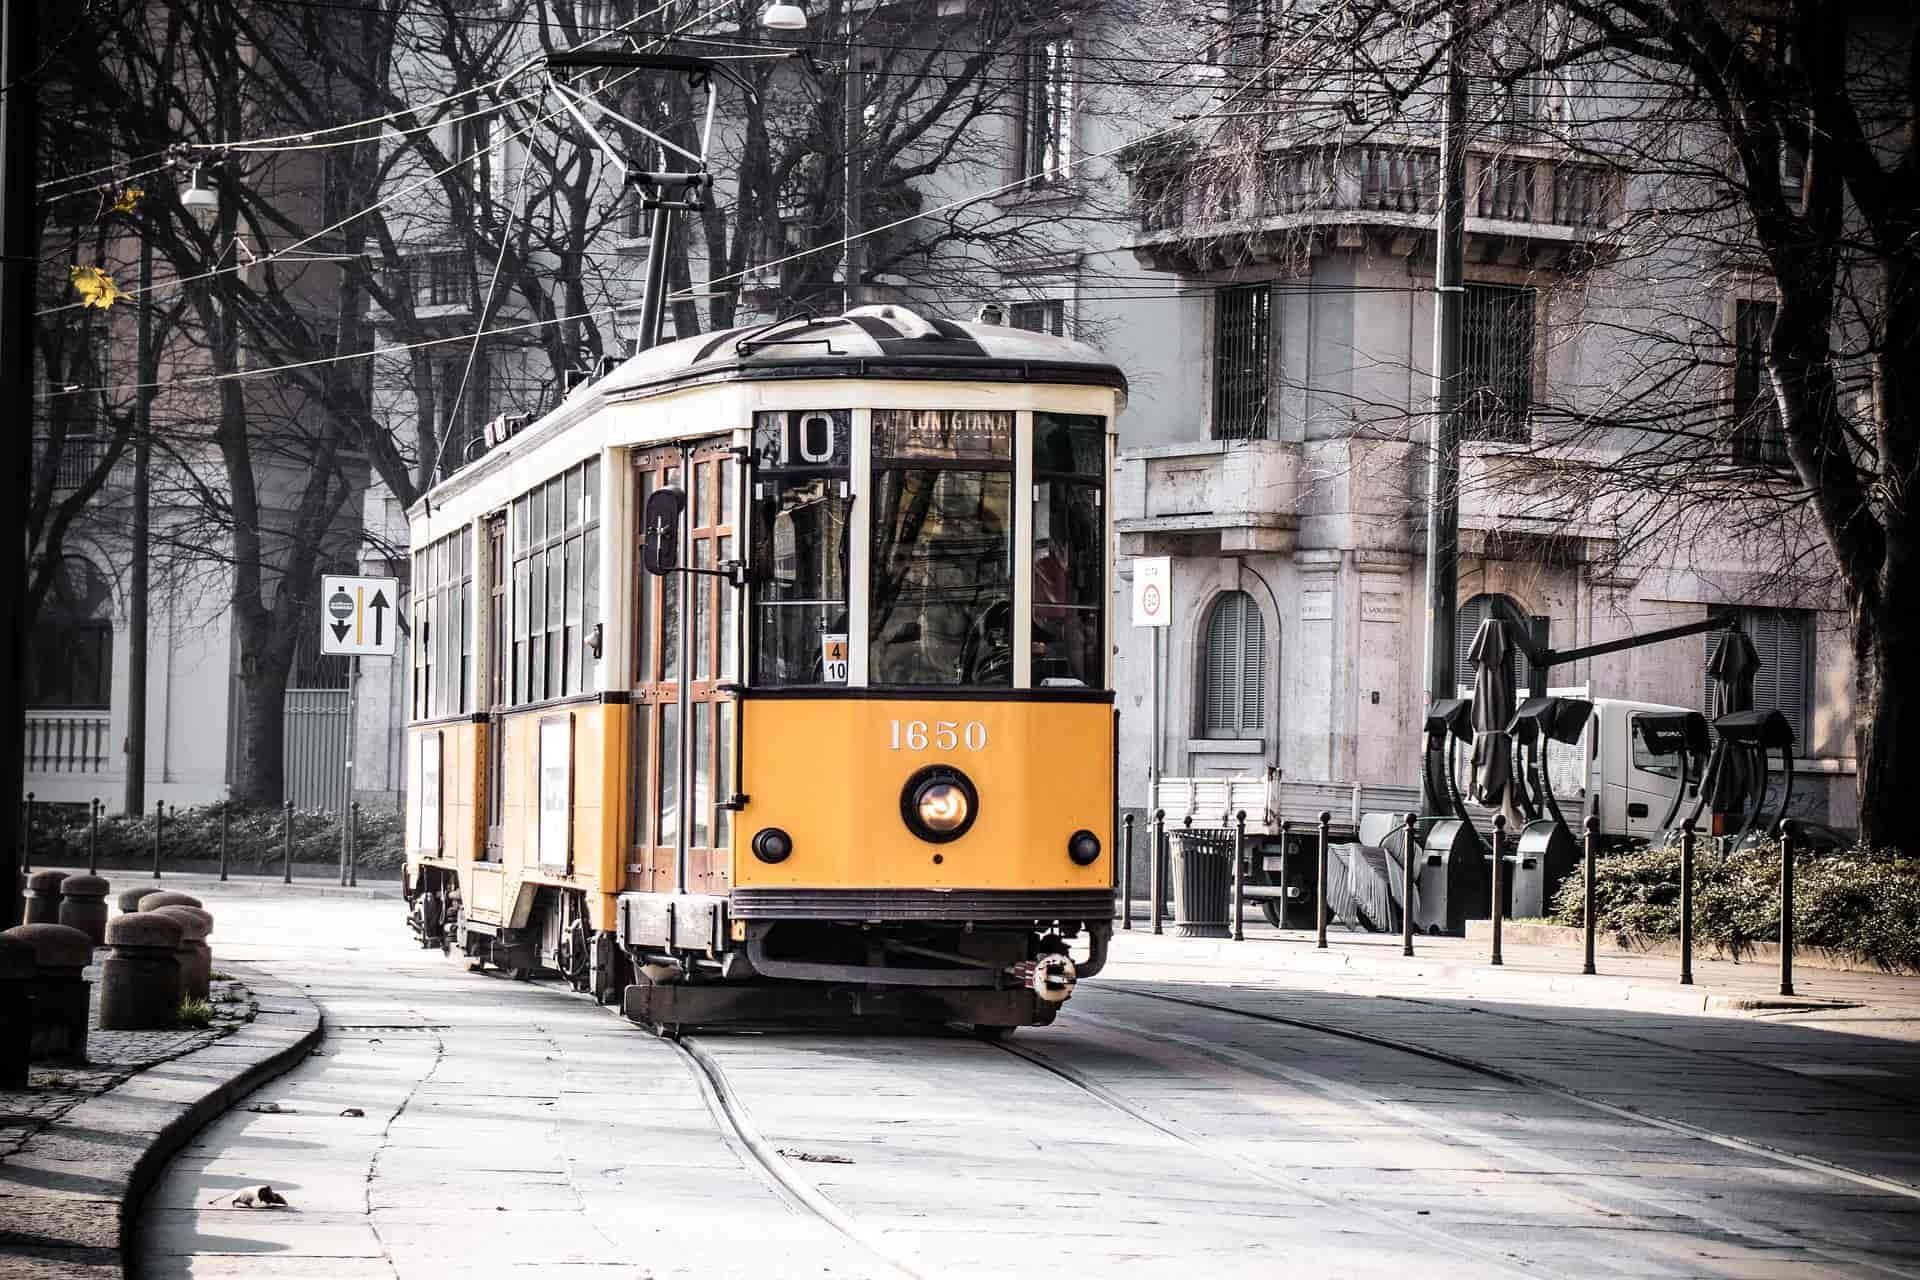 atm rinnovo gratis tessera in scadenza abbonamenti trasporti bus tram metro metropolitana milano foto michela solbiati pixabay milanofree